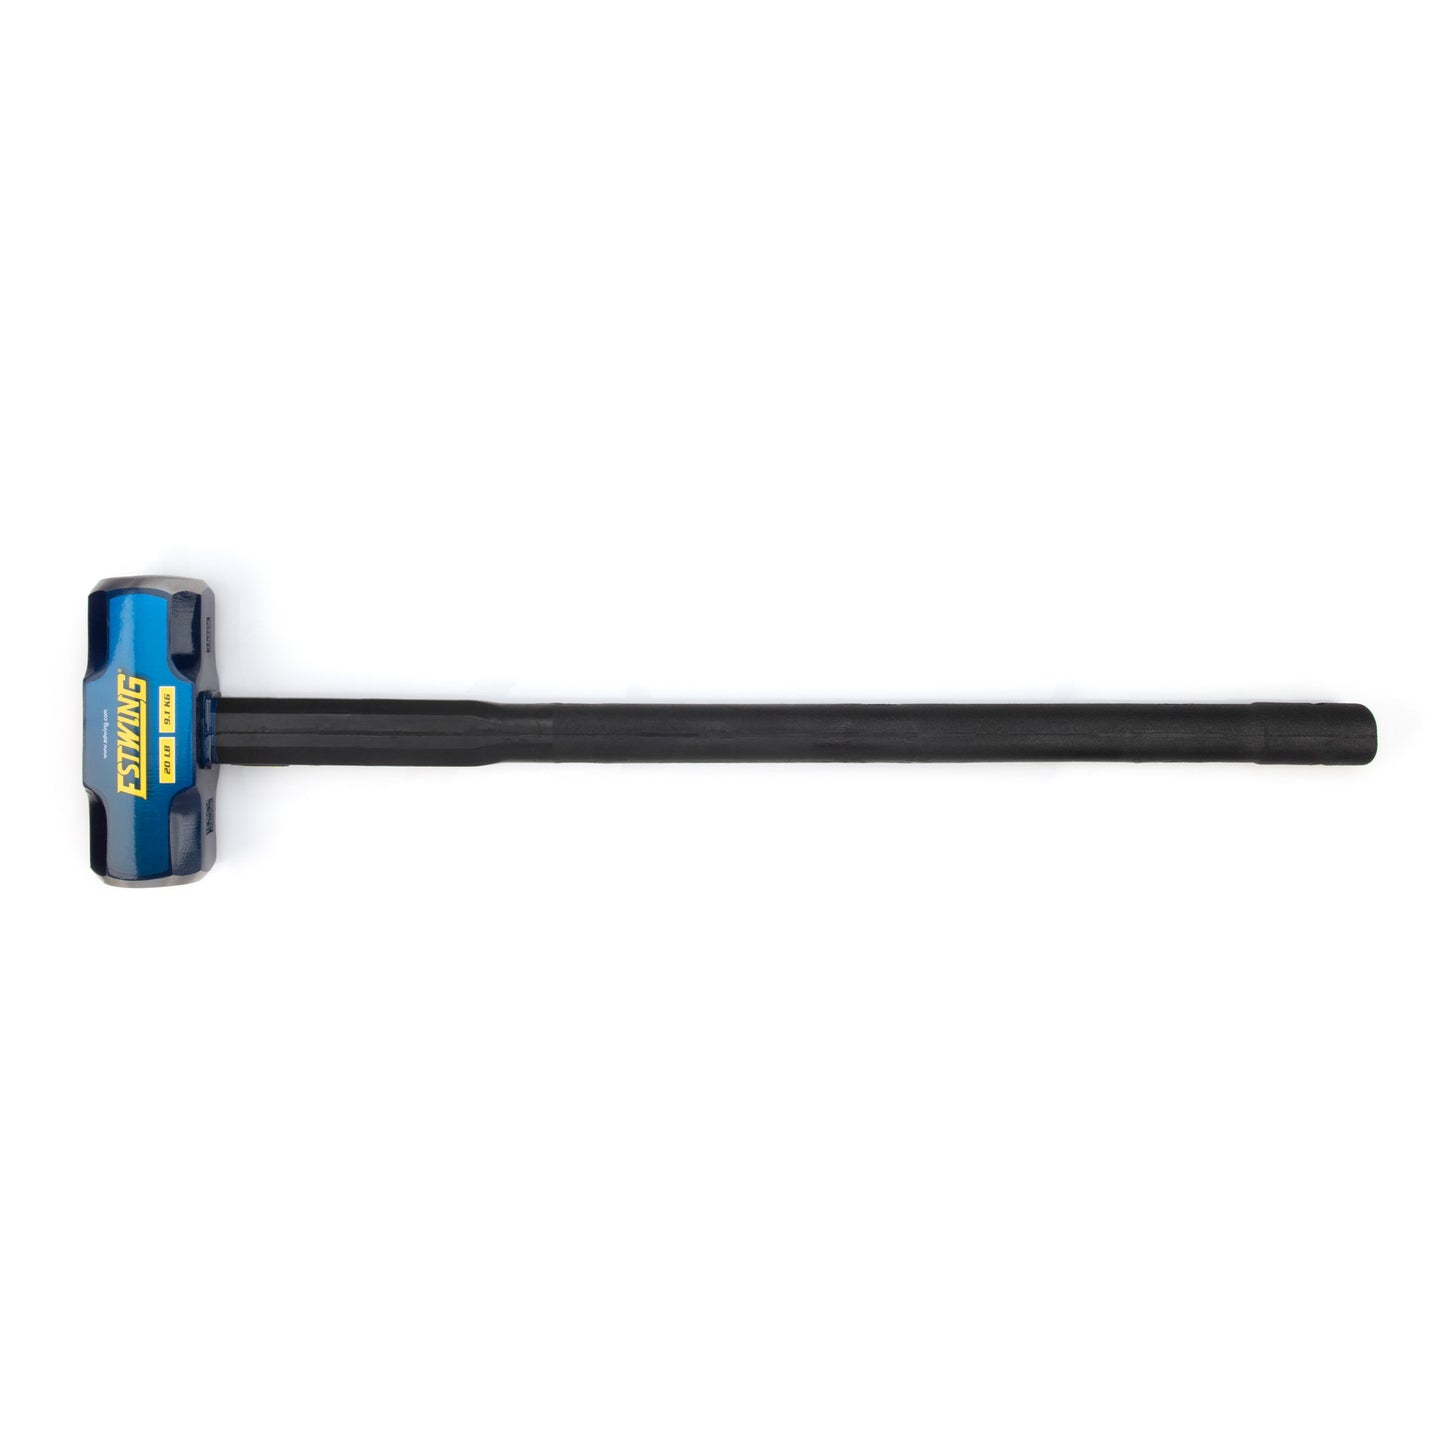 20-Pound Hard Face Sledge Hammer, 36-Inch Indestructible Handle